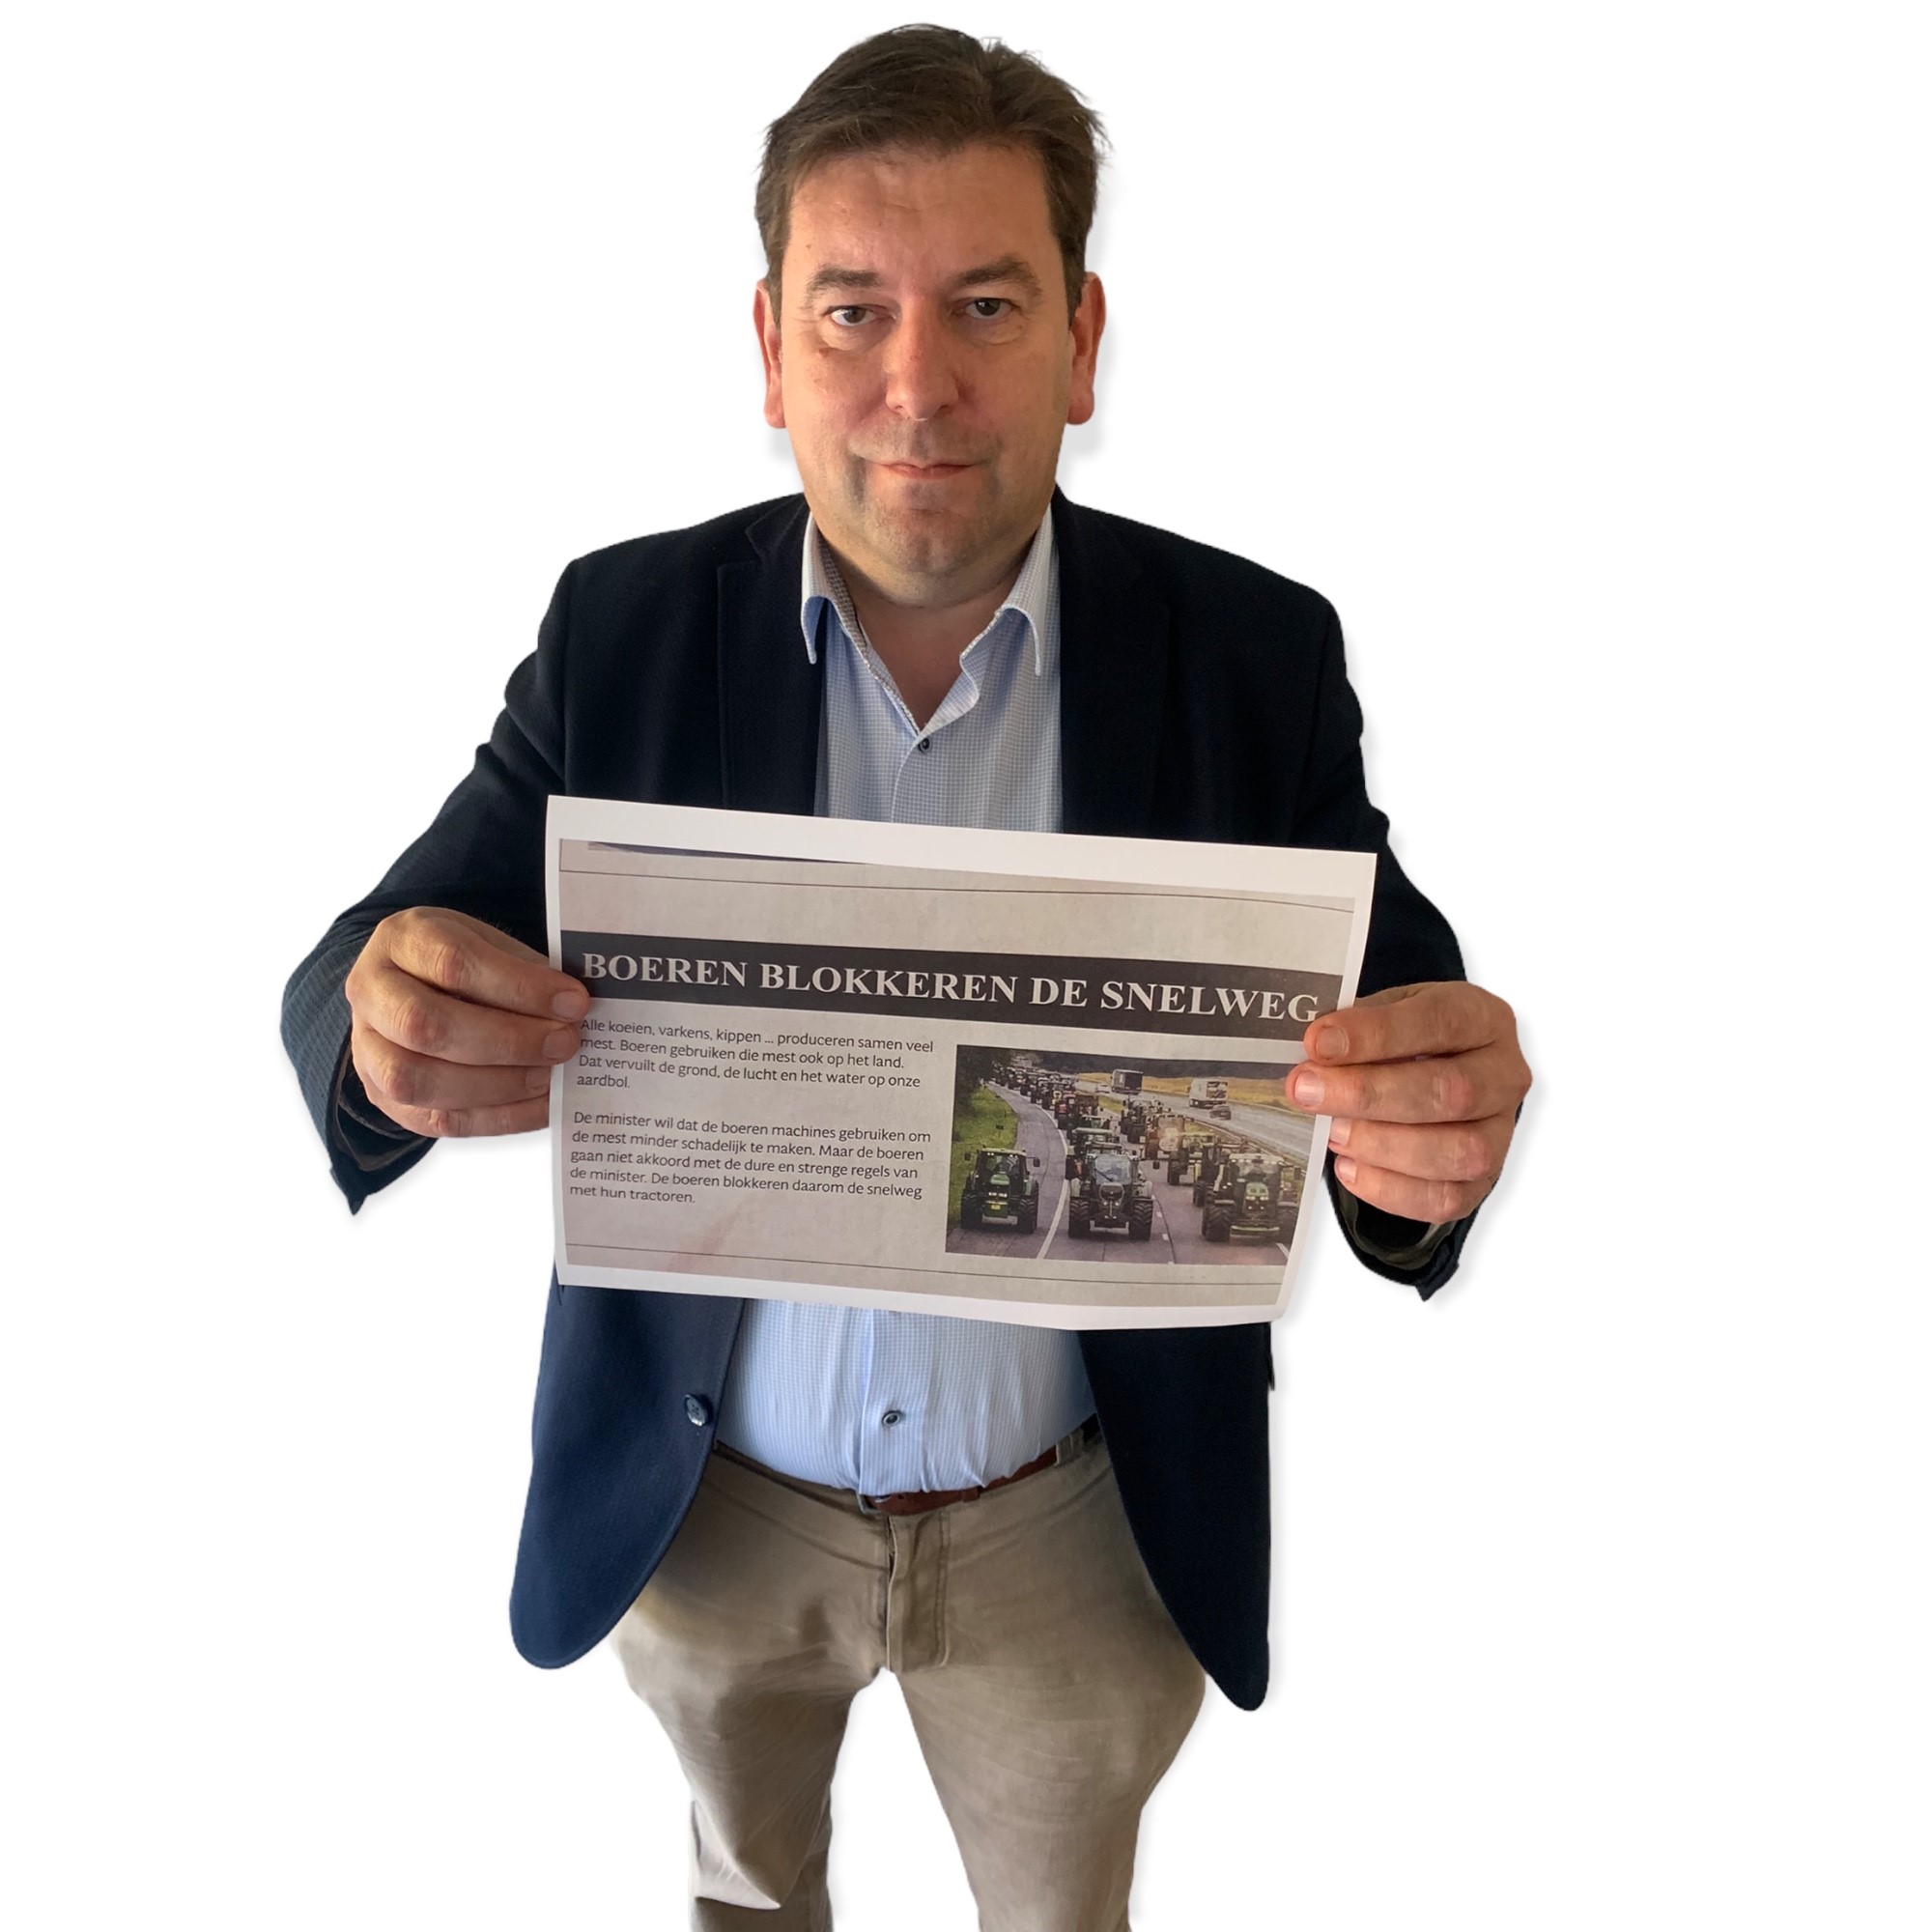 Vlaams parlementslid Bart Dochy bezorgd over tendentieuze stelling over landbouwers in schoolboek